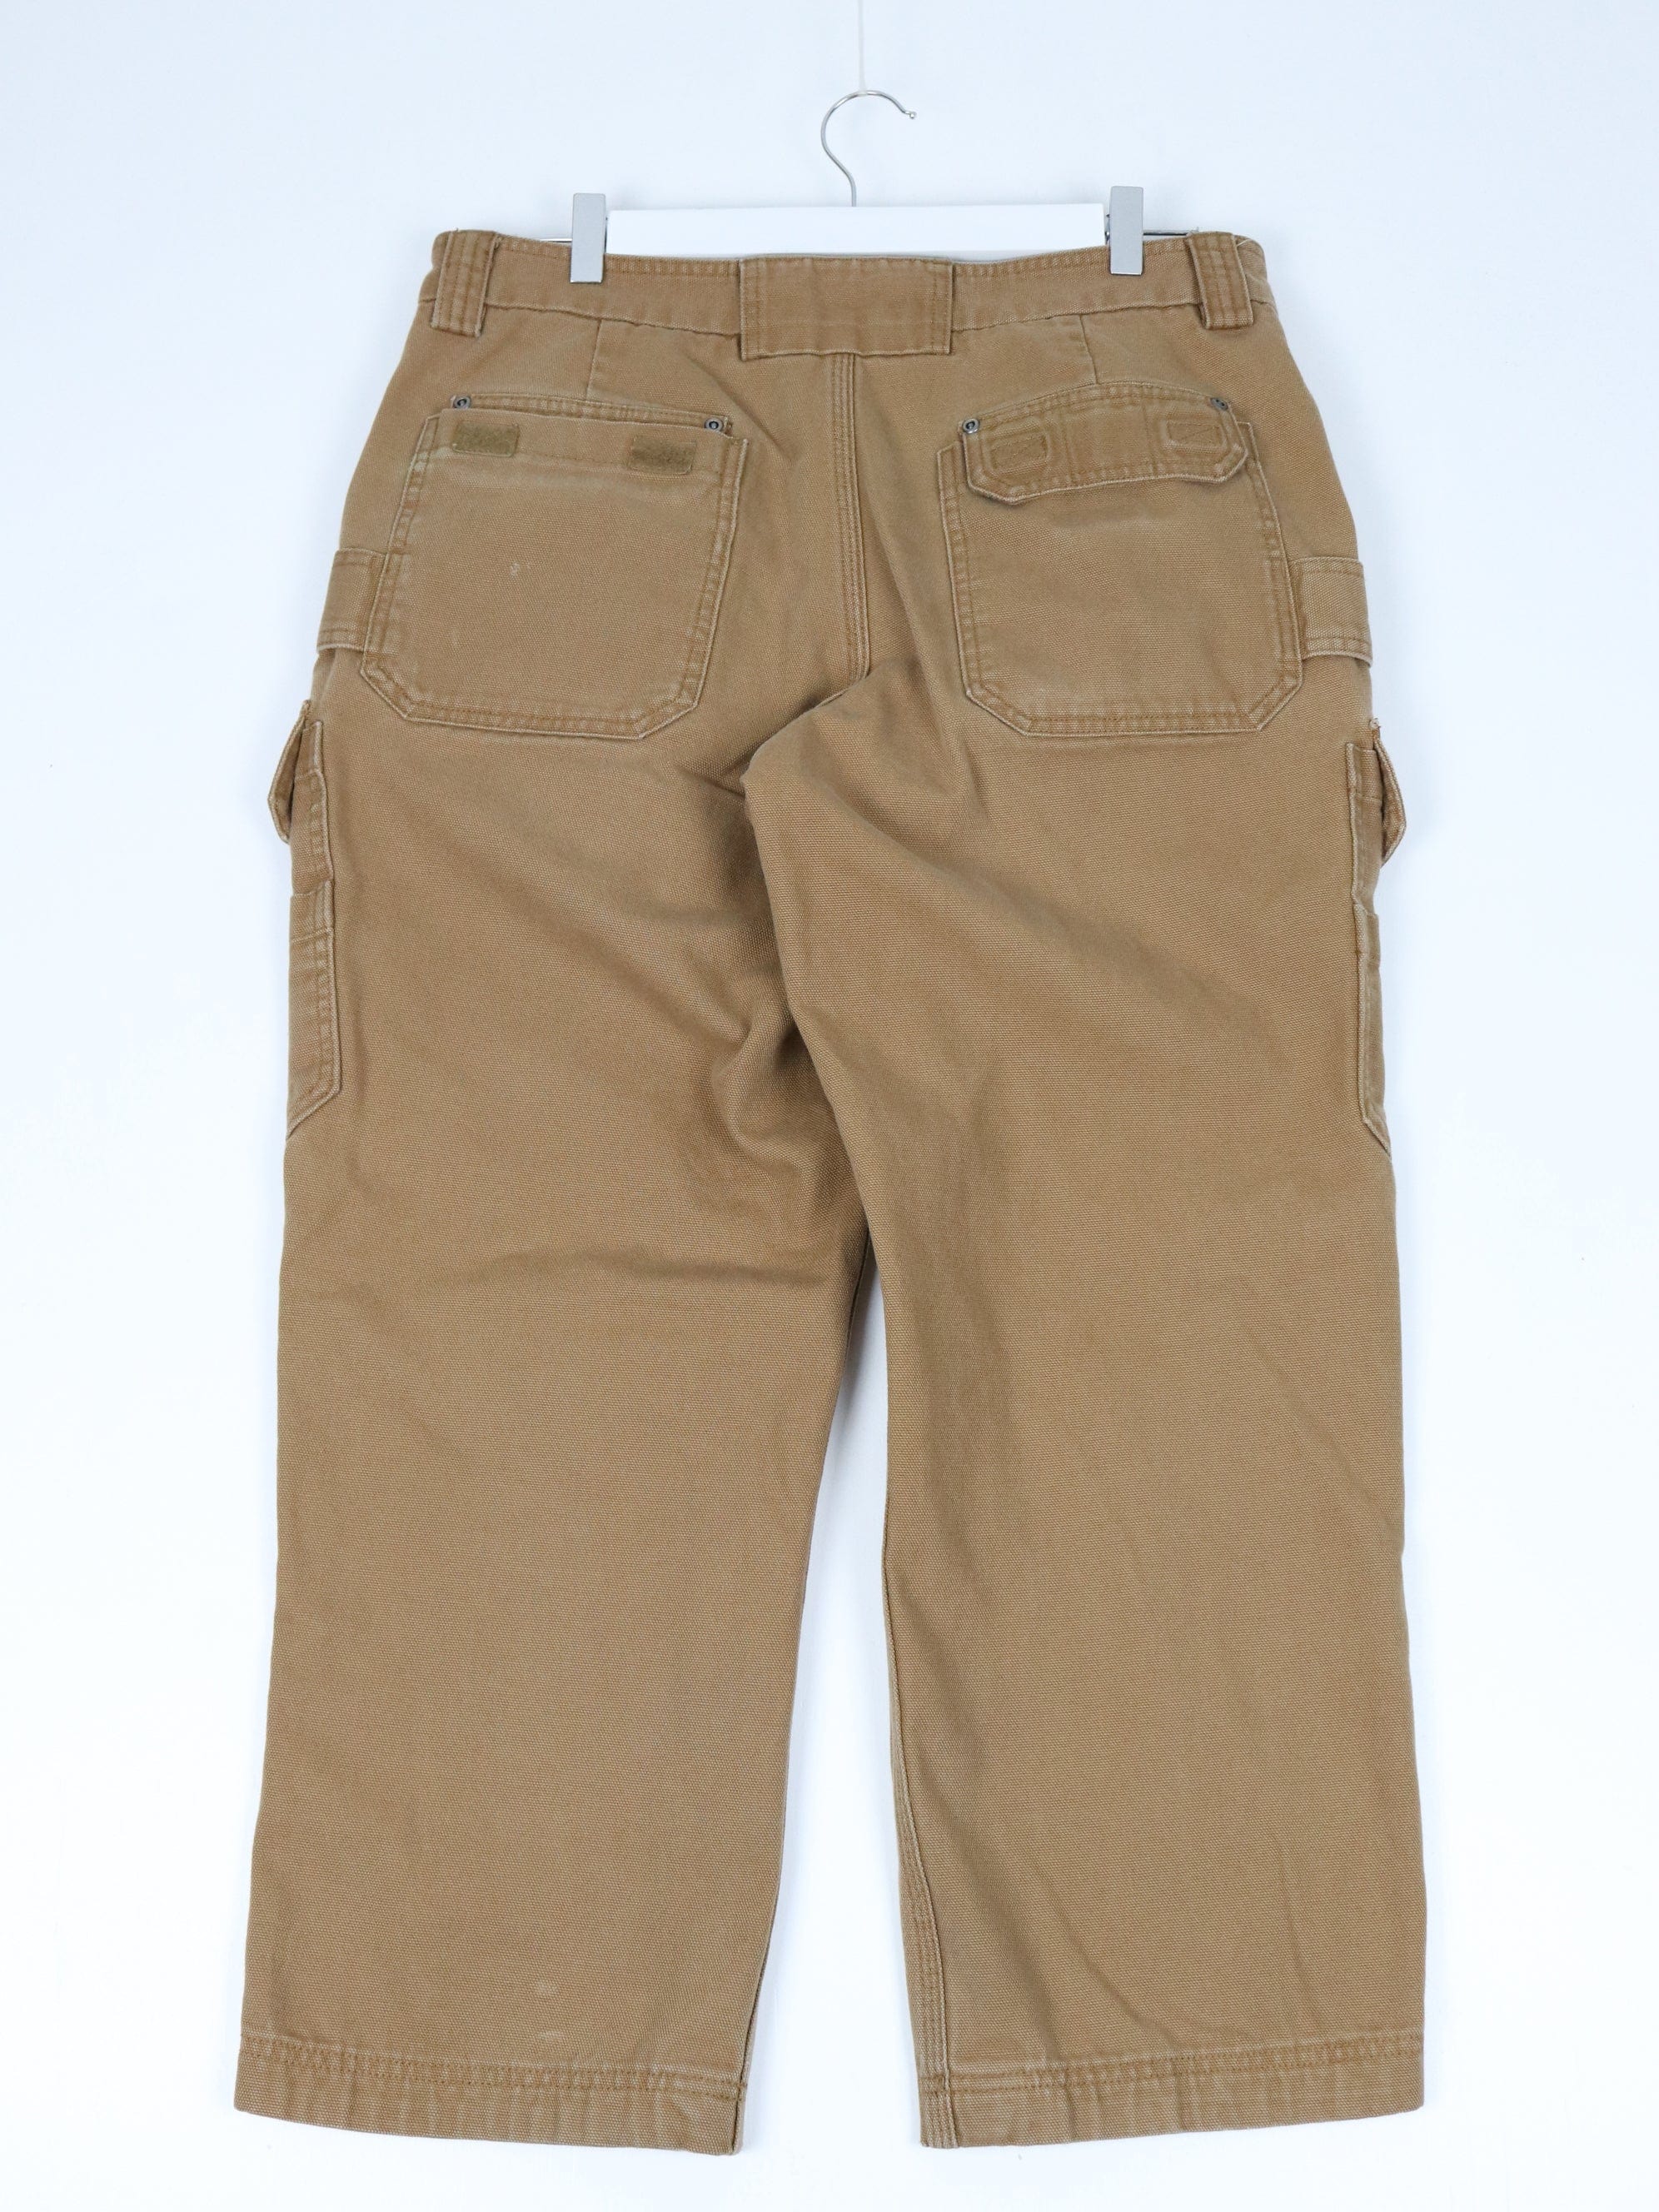 C.E. Schmidt Pants Mens 34 x 30 Fleece Lined Work Wear – Proper Vintage